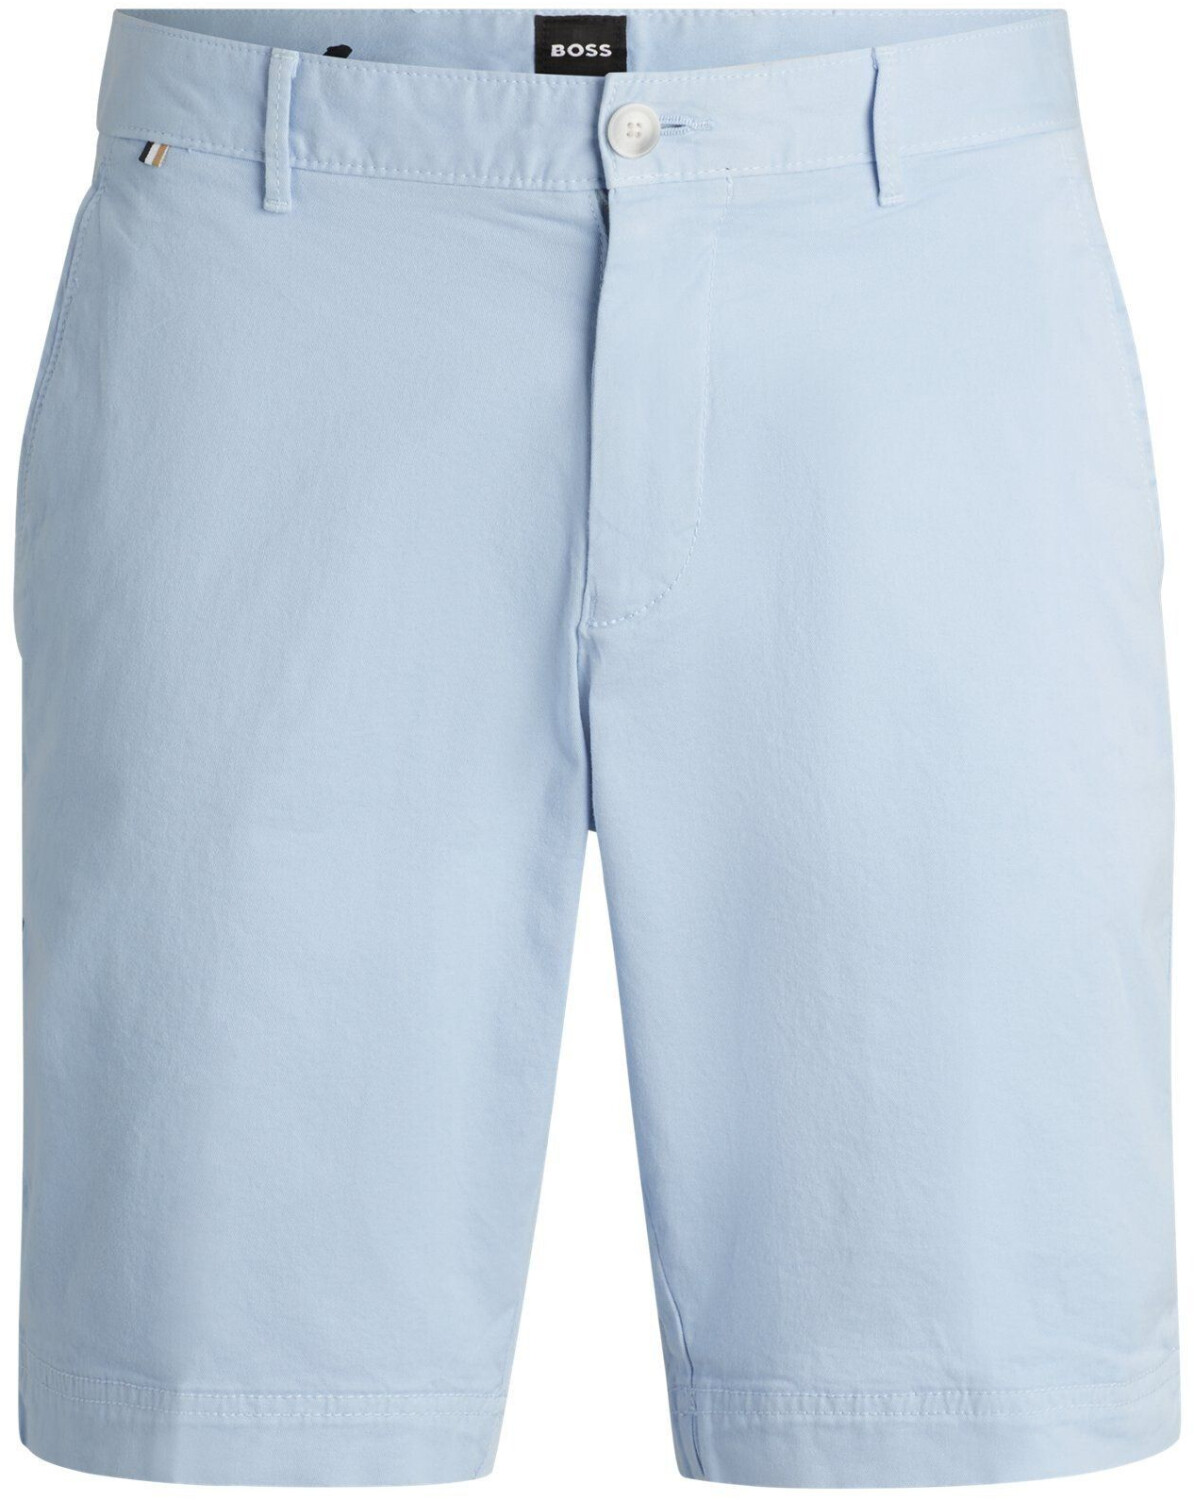 Buy Hugo Boss Cotton twill slice shorts (50512524) light blue from £99. ...